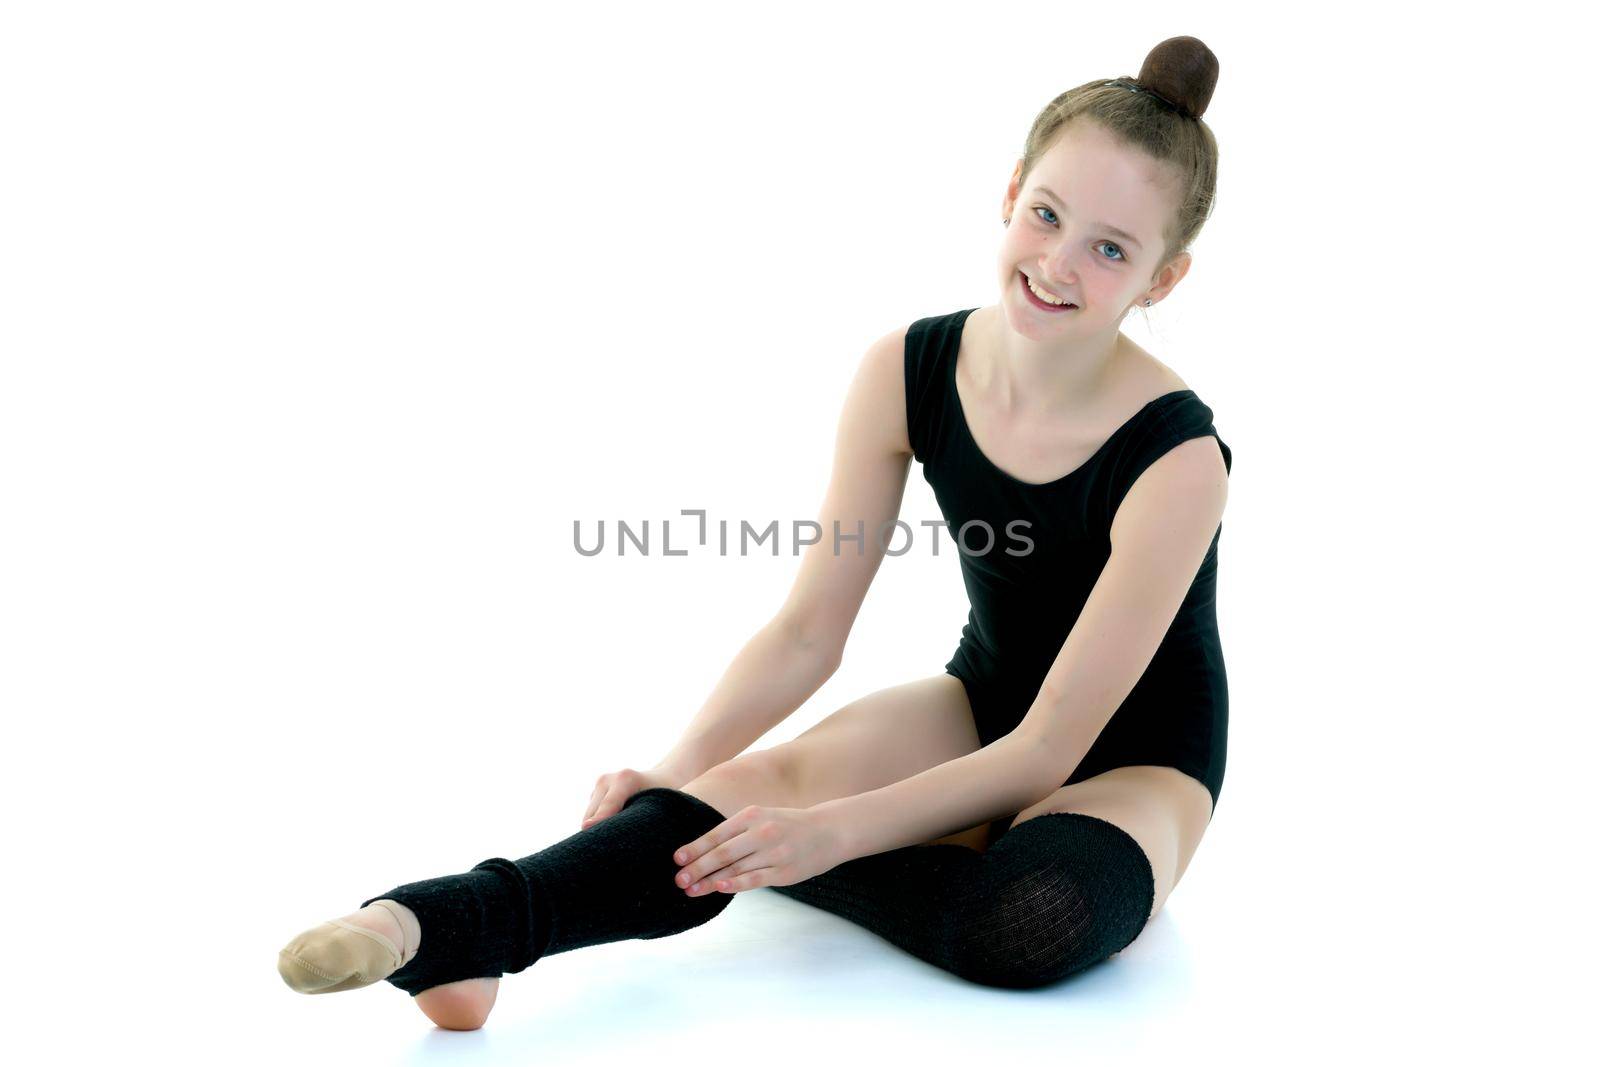 Girl gymnast puts on her leg black leggings. Sport concept, isolated on white background.